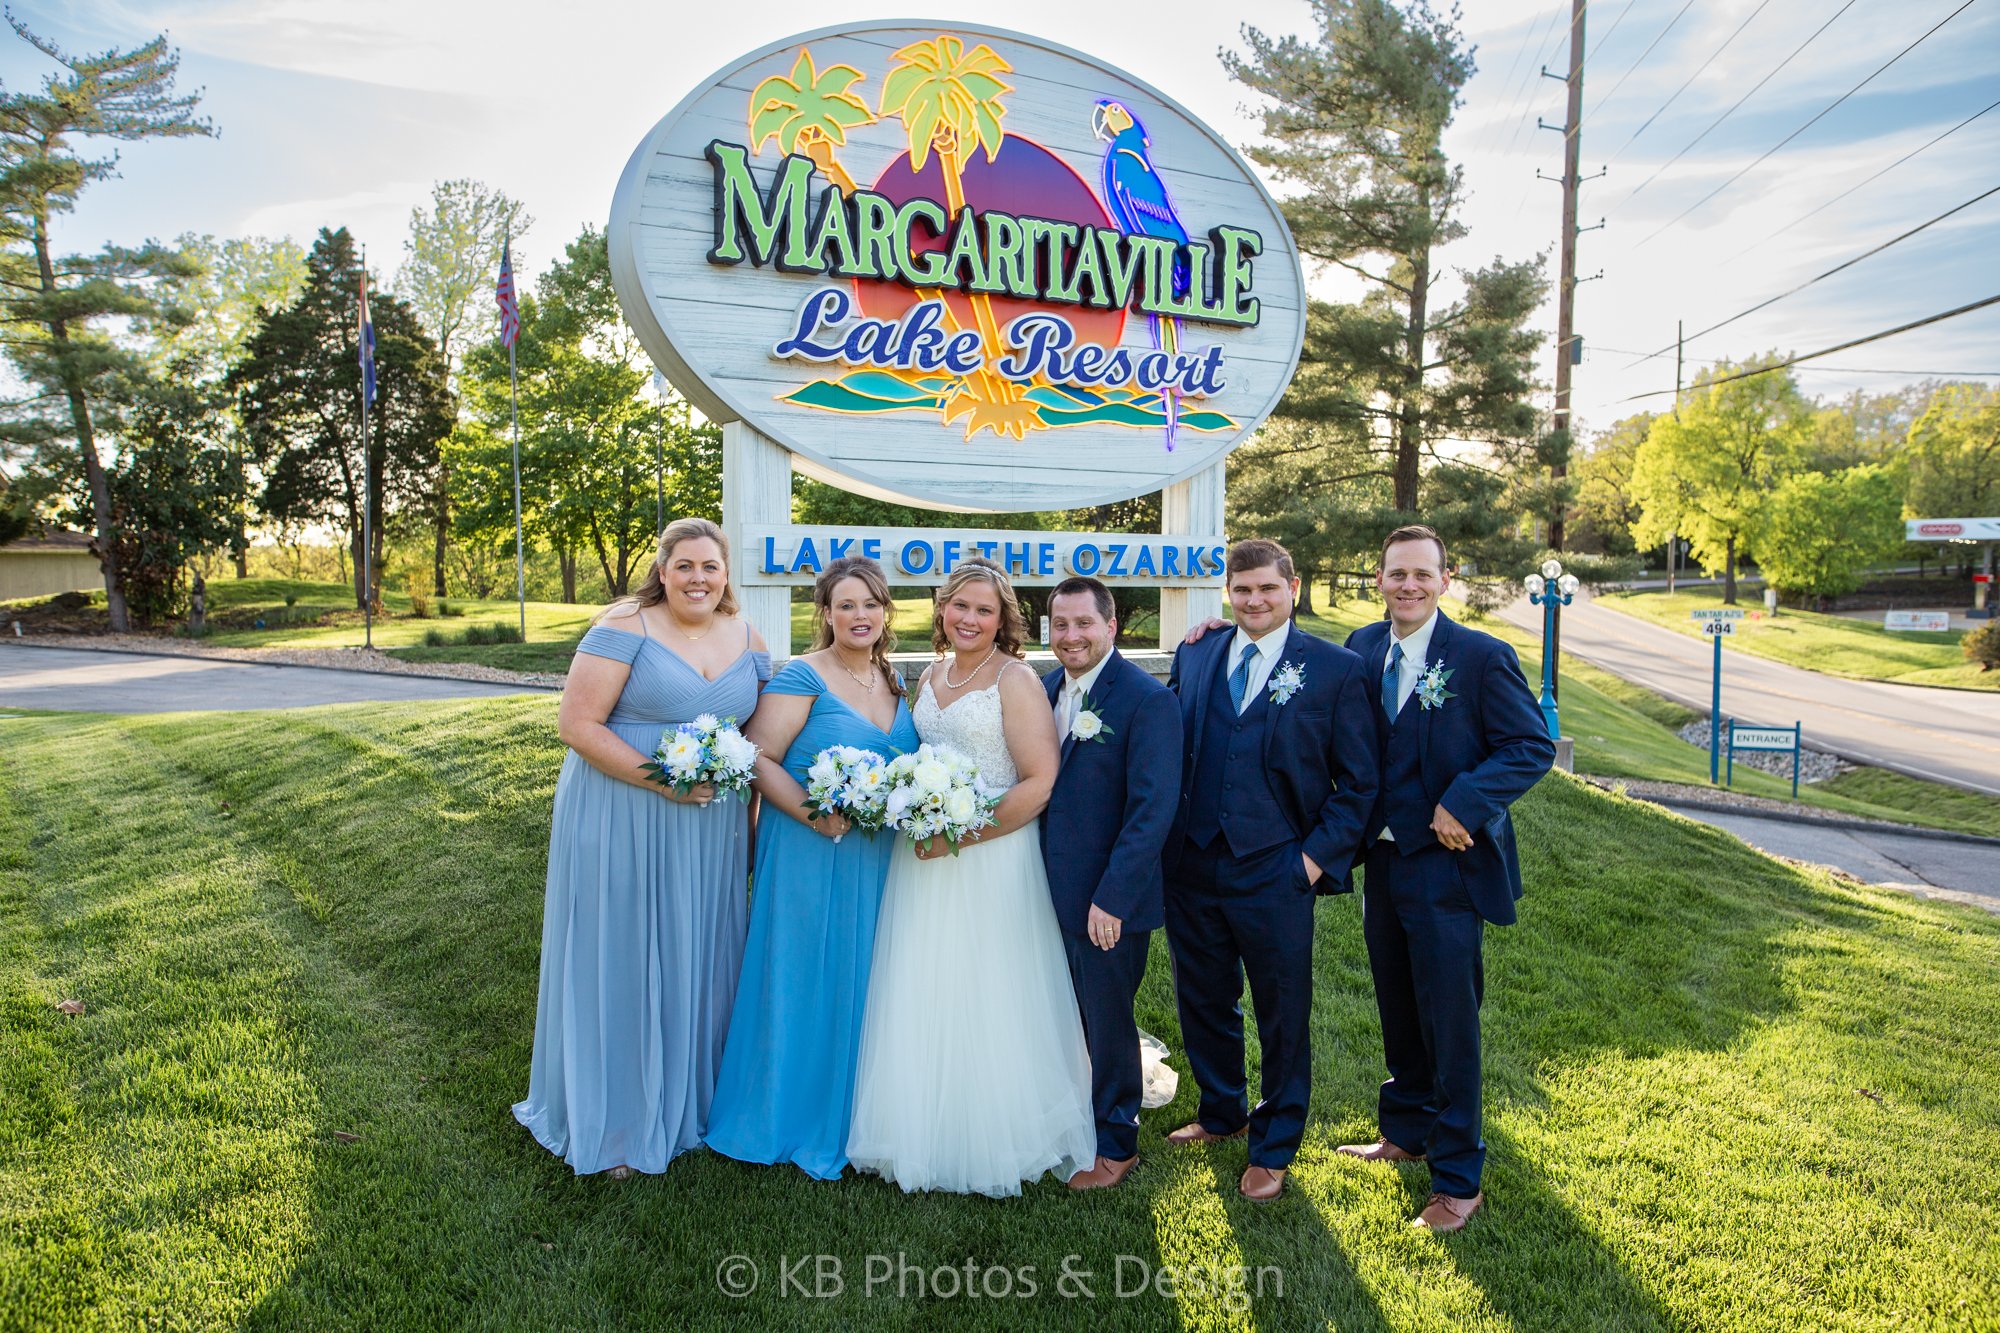 Destination Wedding Photography at Margaritaville Resort Lake of the Ozarks Missouri with KB Photos and Design